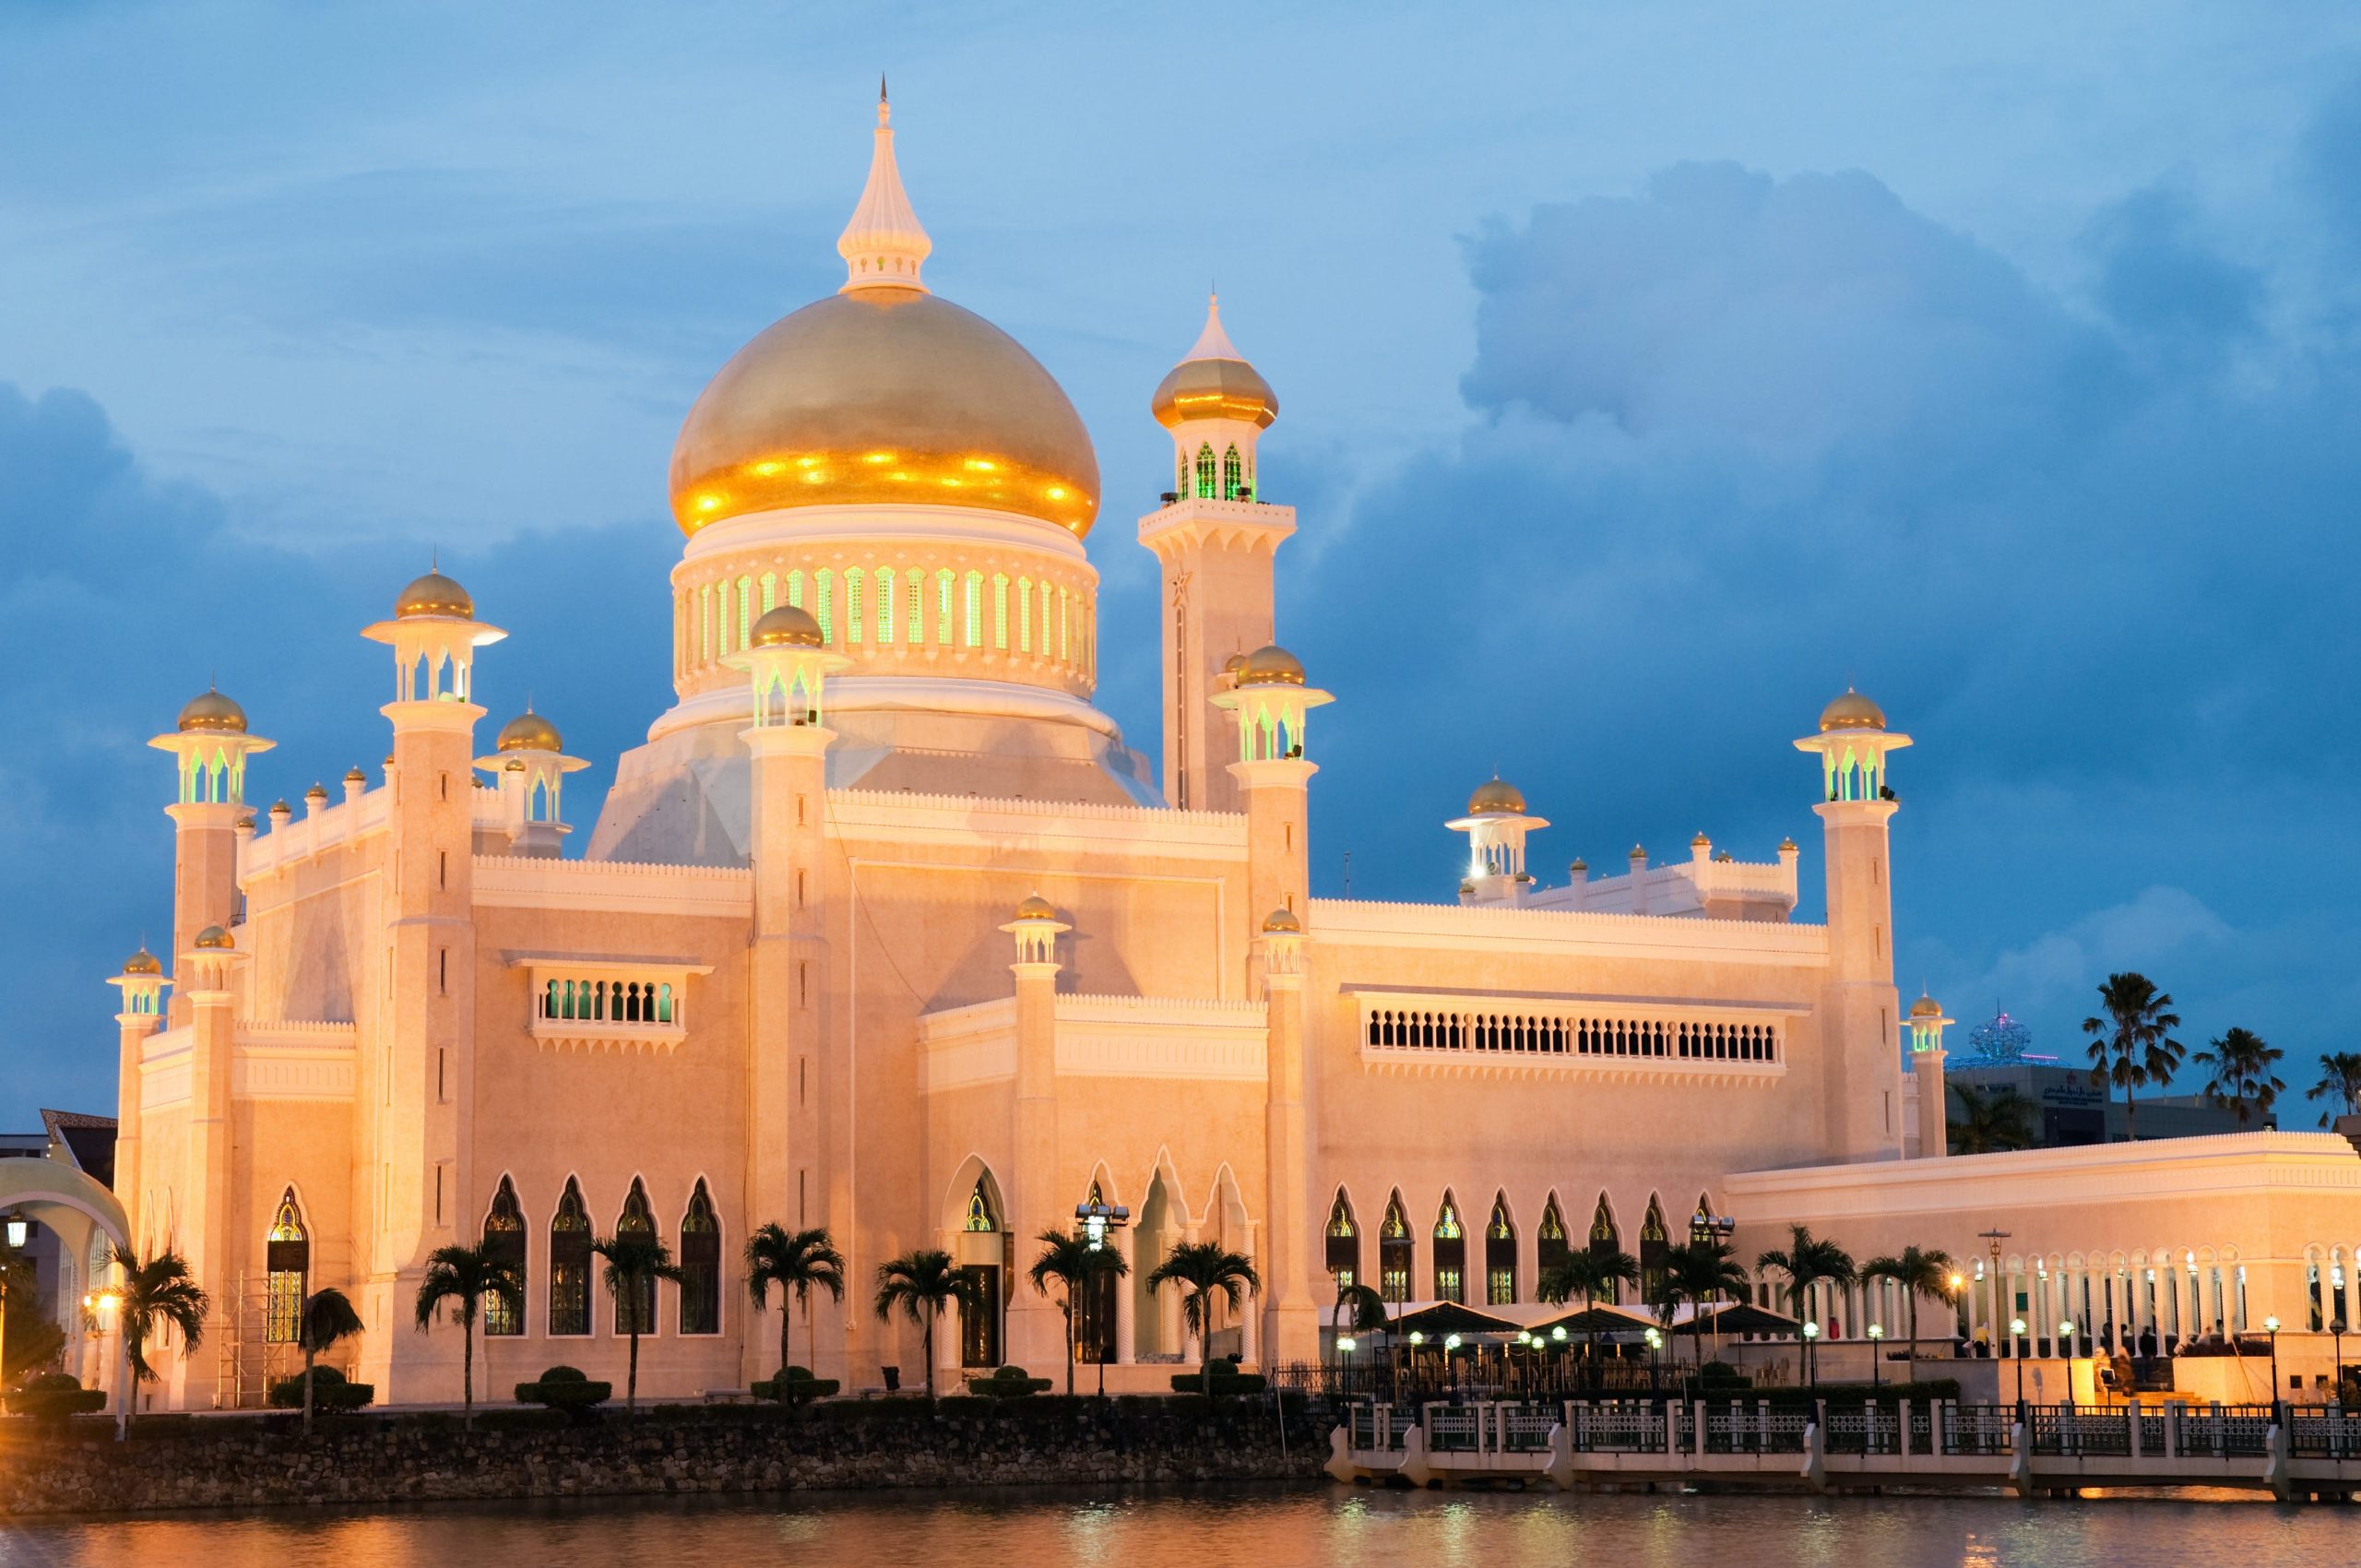 omar ali saifuddien mosque, salah satu masjid indah di dunia